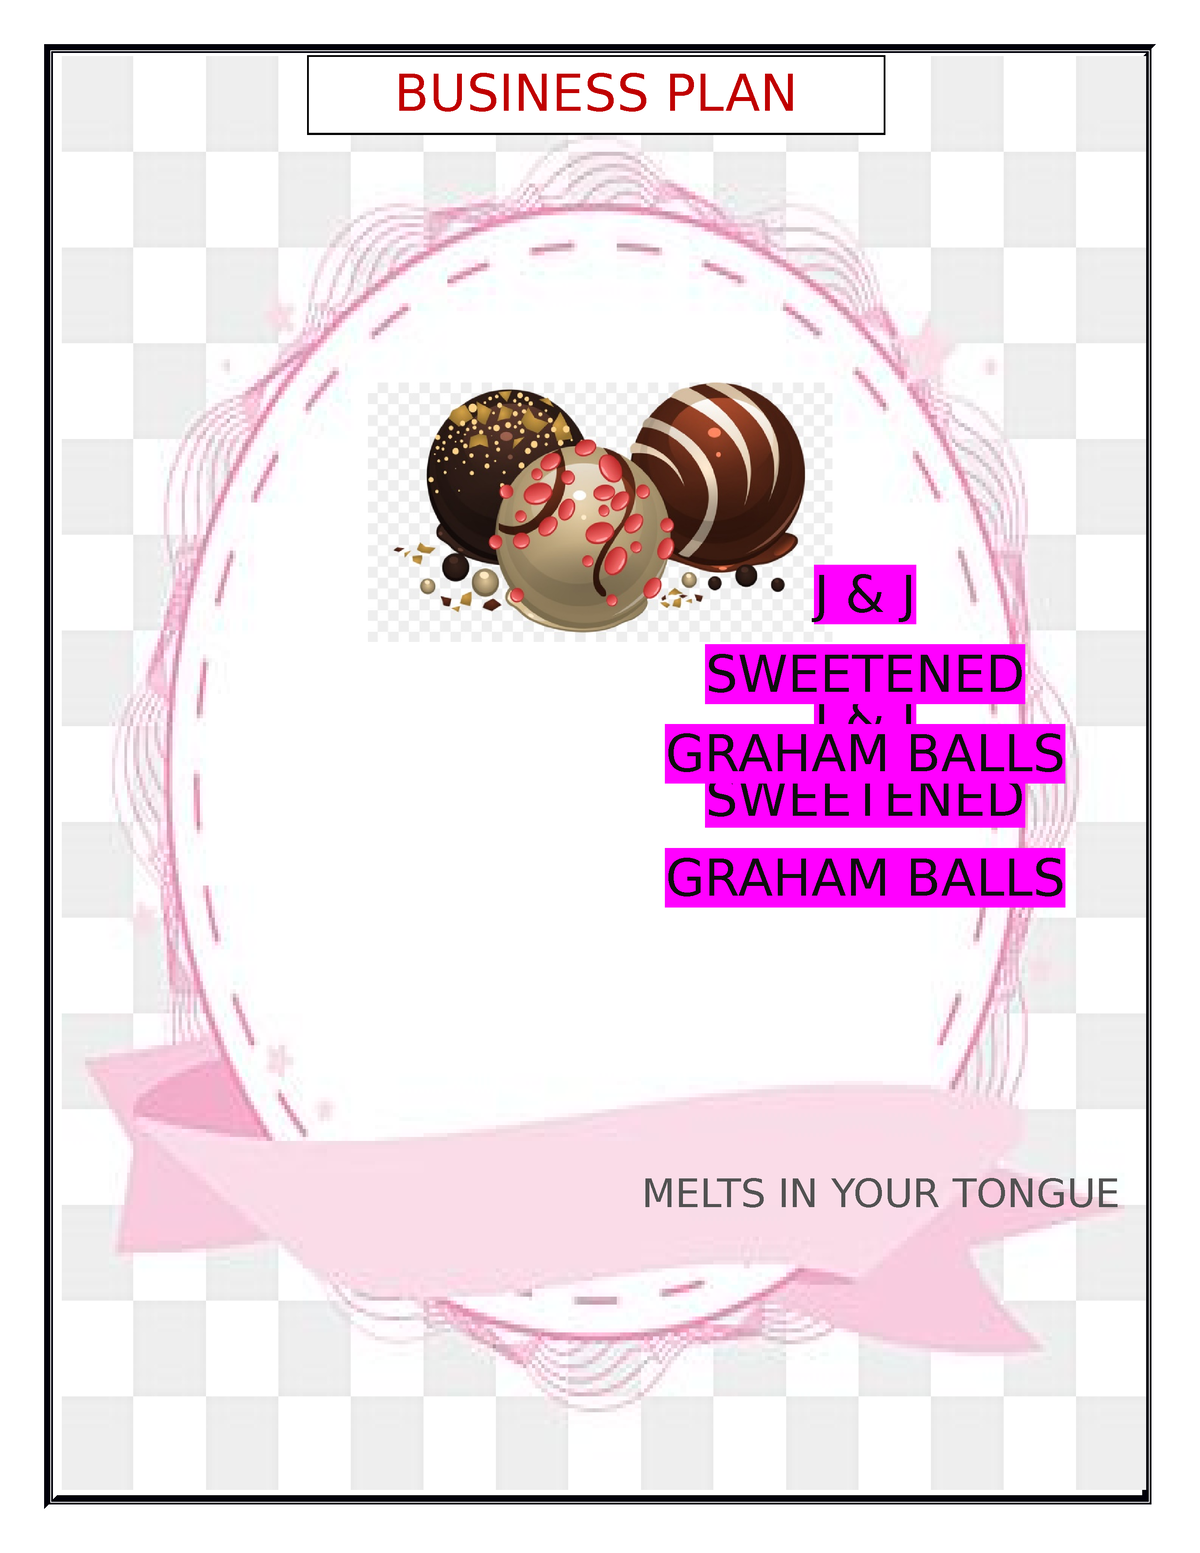 business plan of graham balls